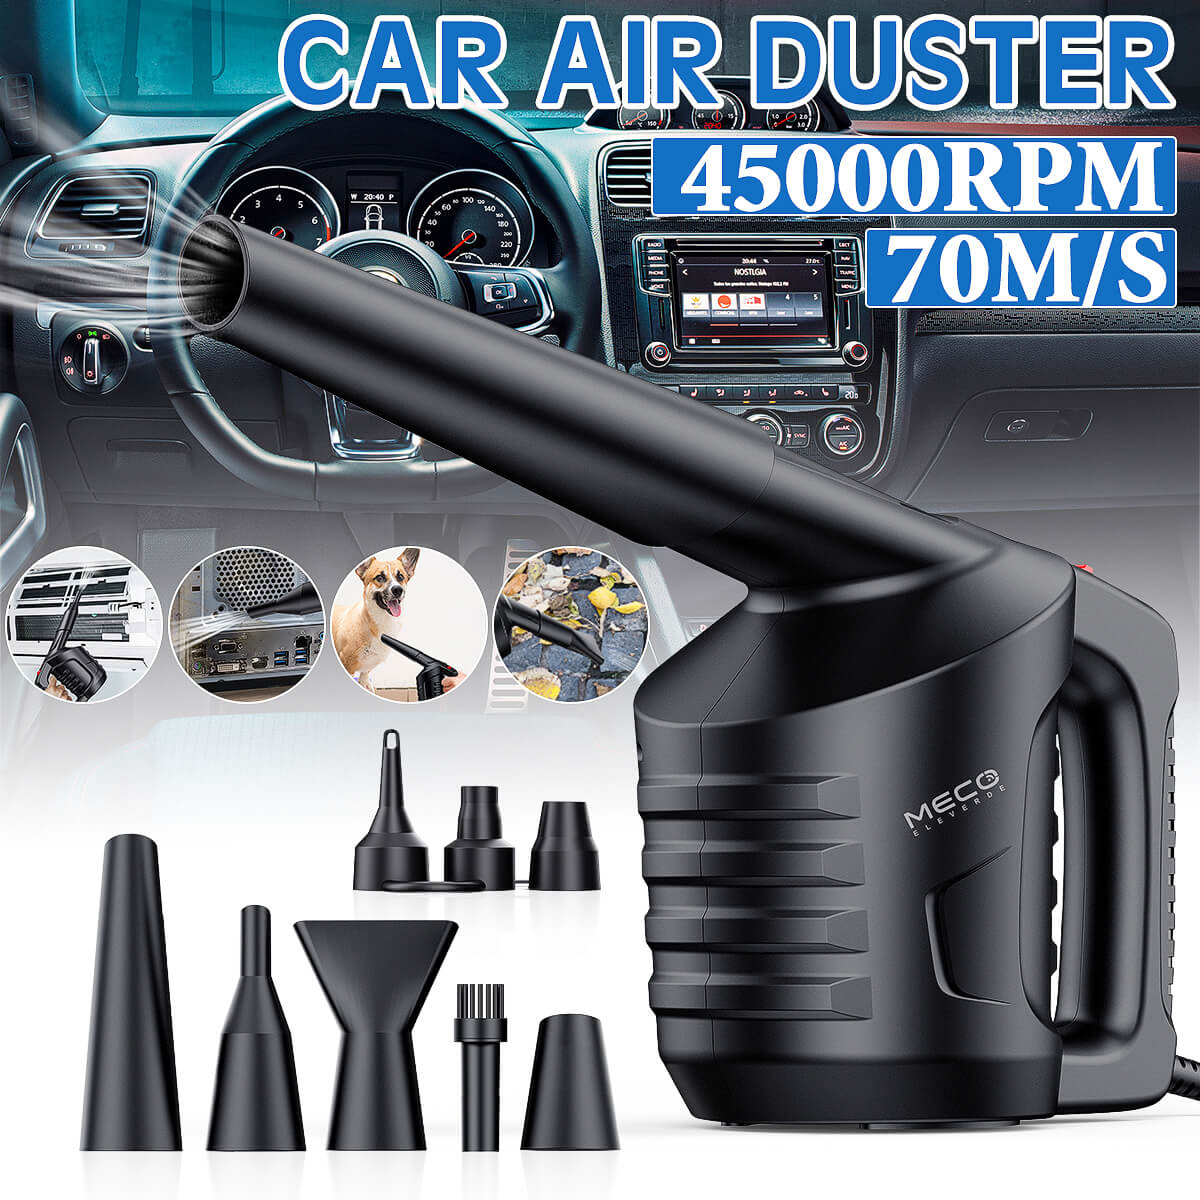 Master Mechanic MM 10 Air Duster